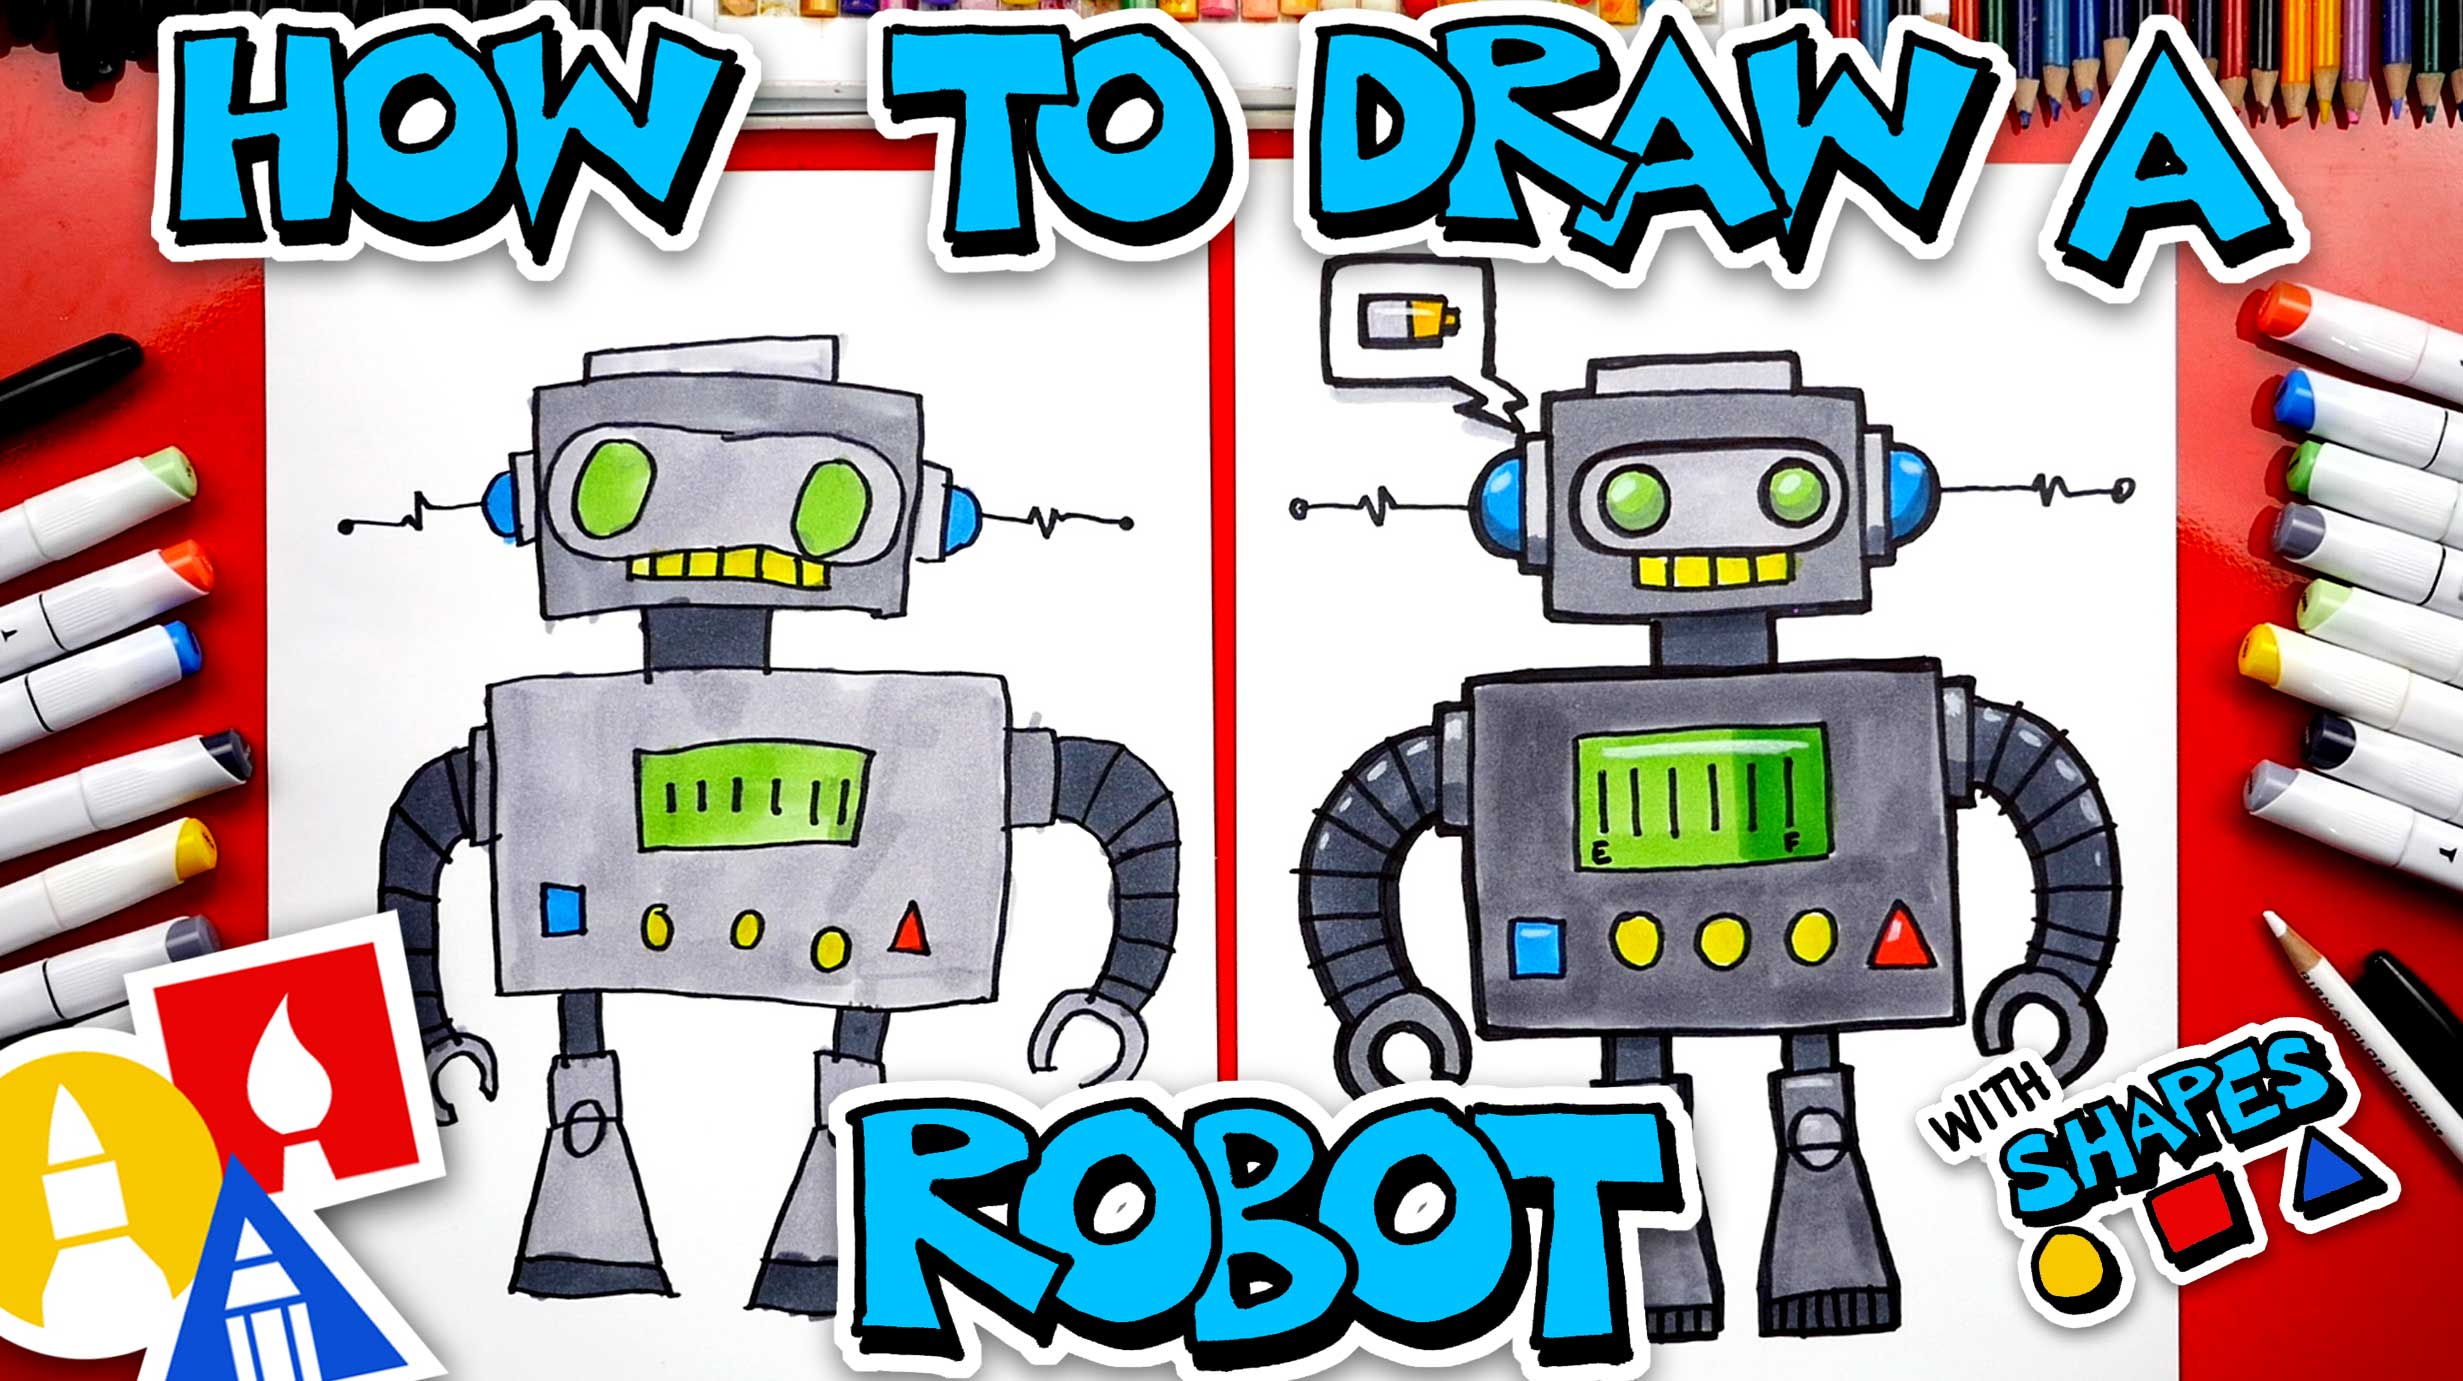 https://artforkidshub.com/wp-content/uploads/2021/01/How-To-Draw-A-Robot-thumbnail.jpg